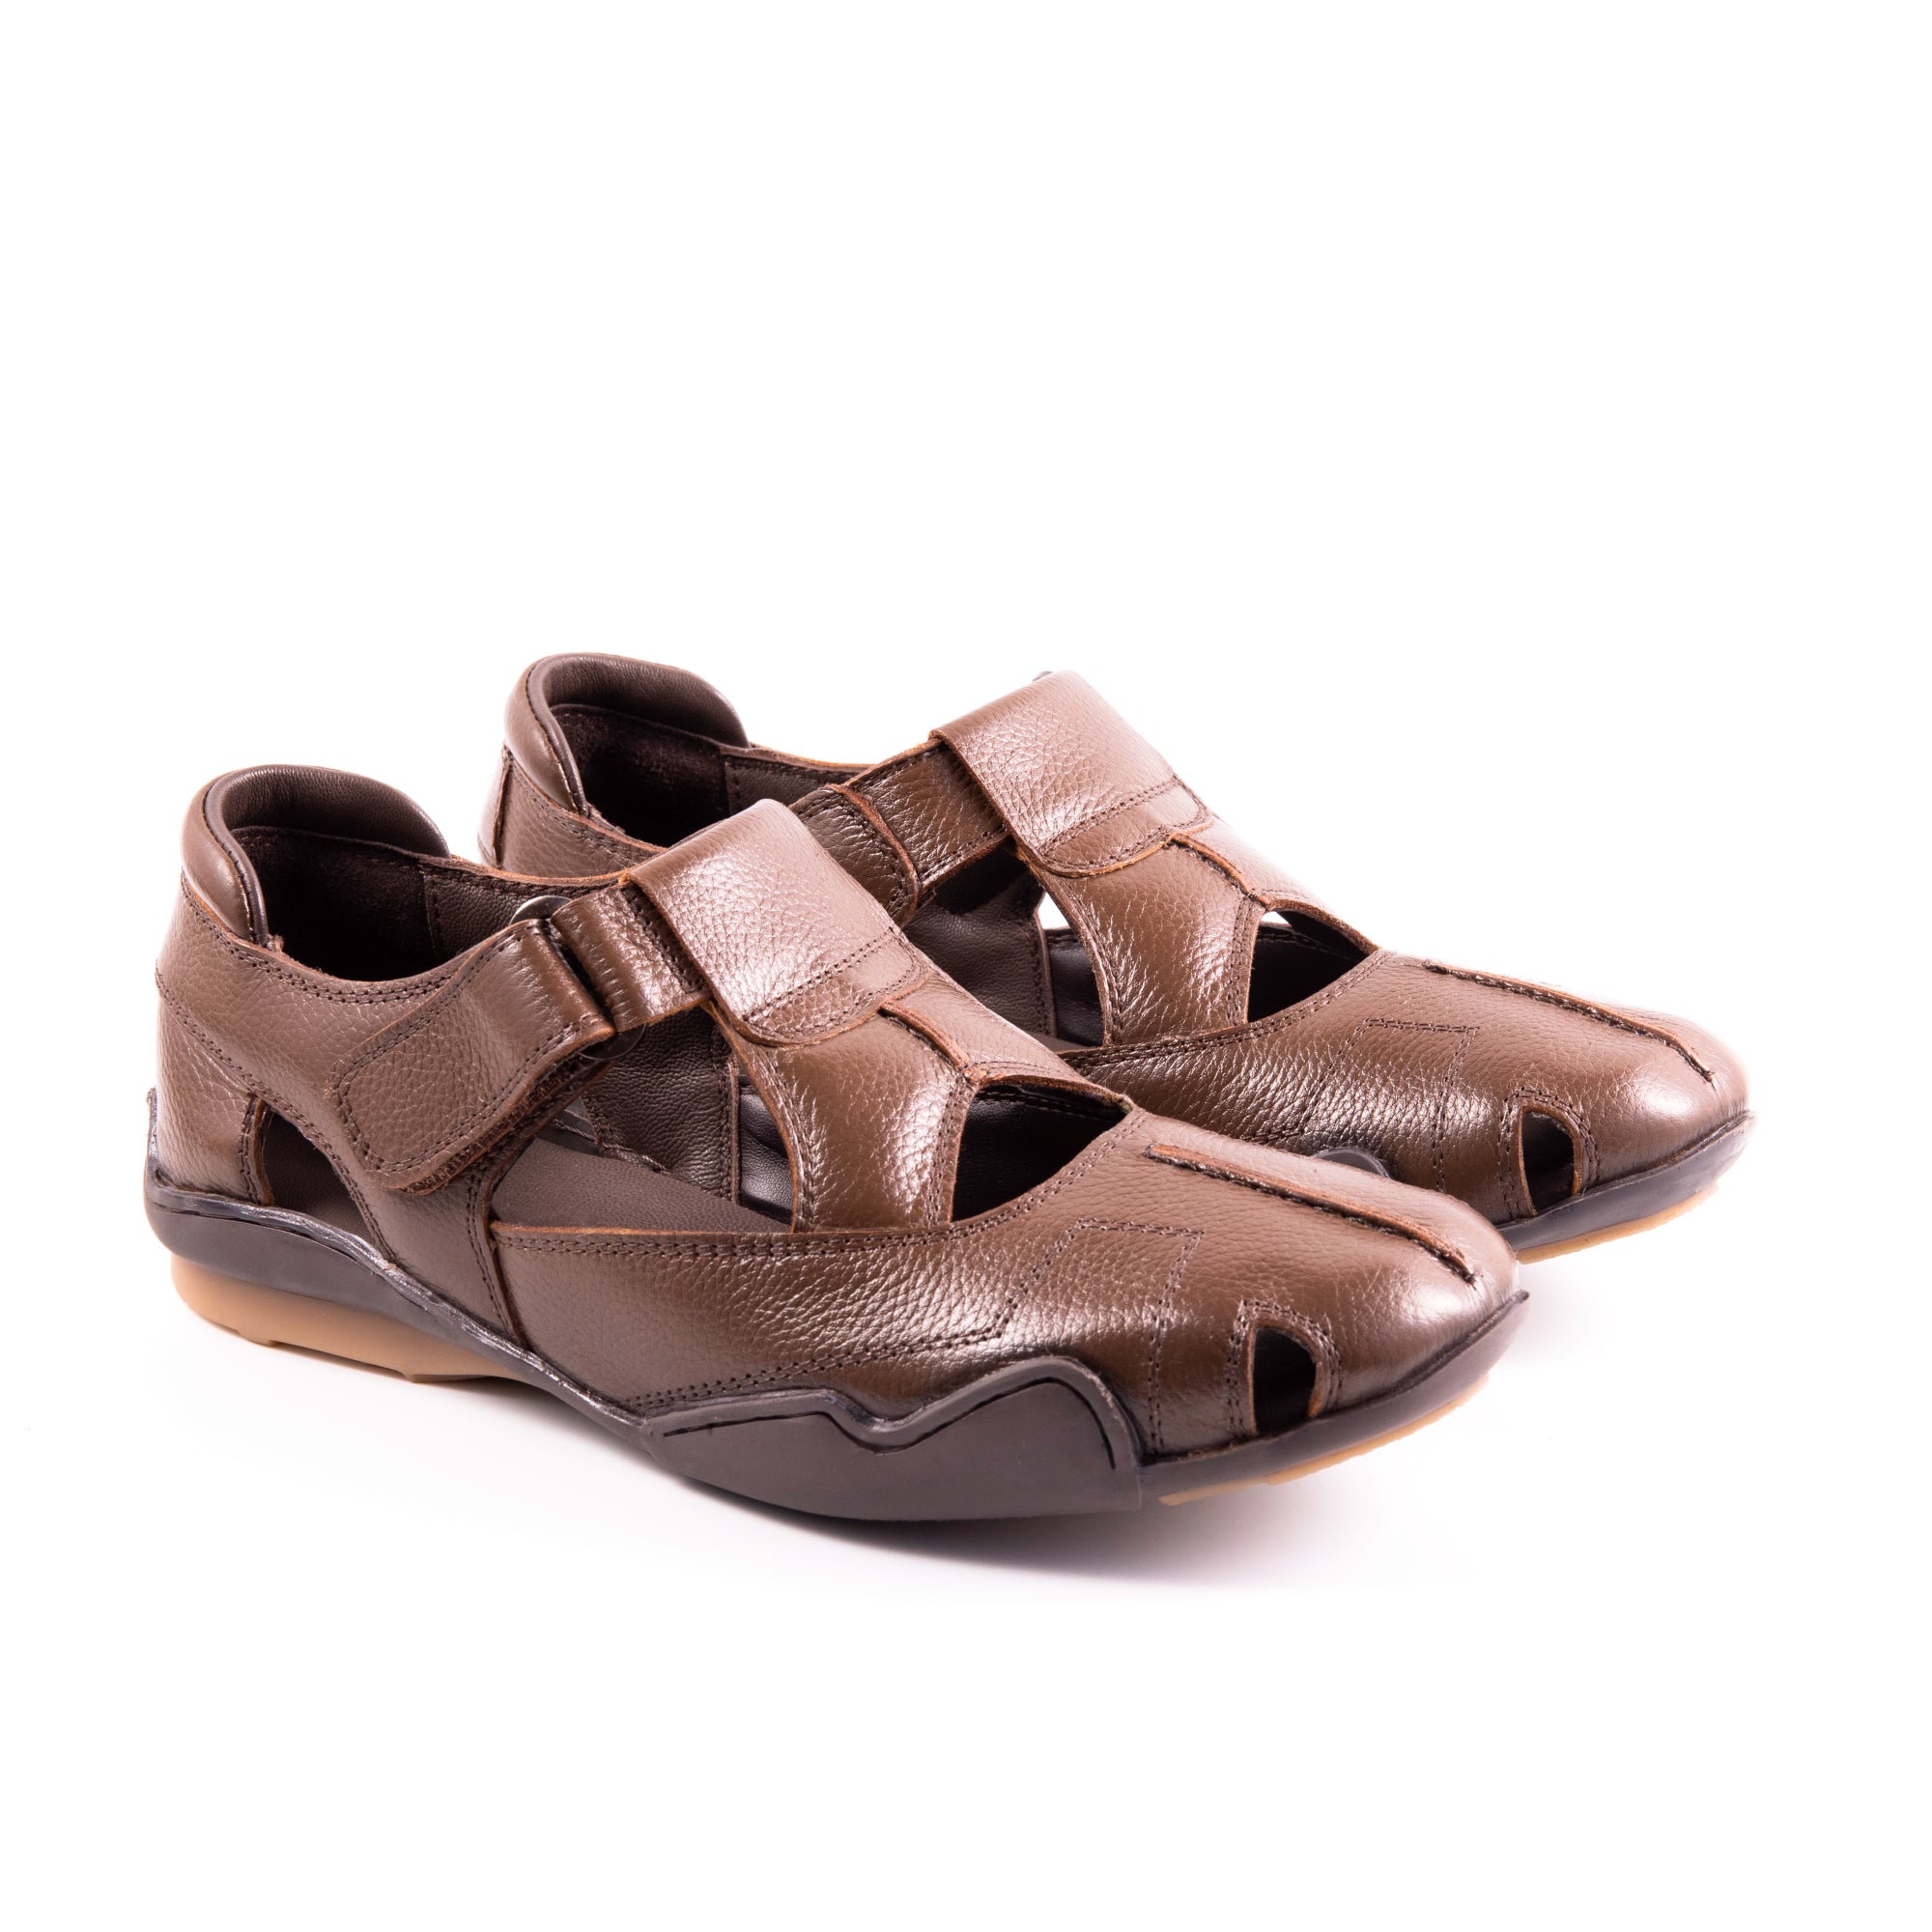 CM Leather Sandals for men's